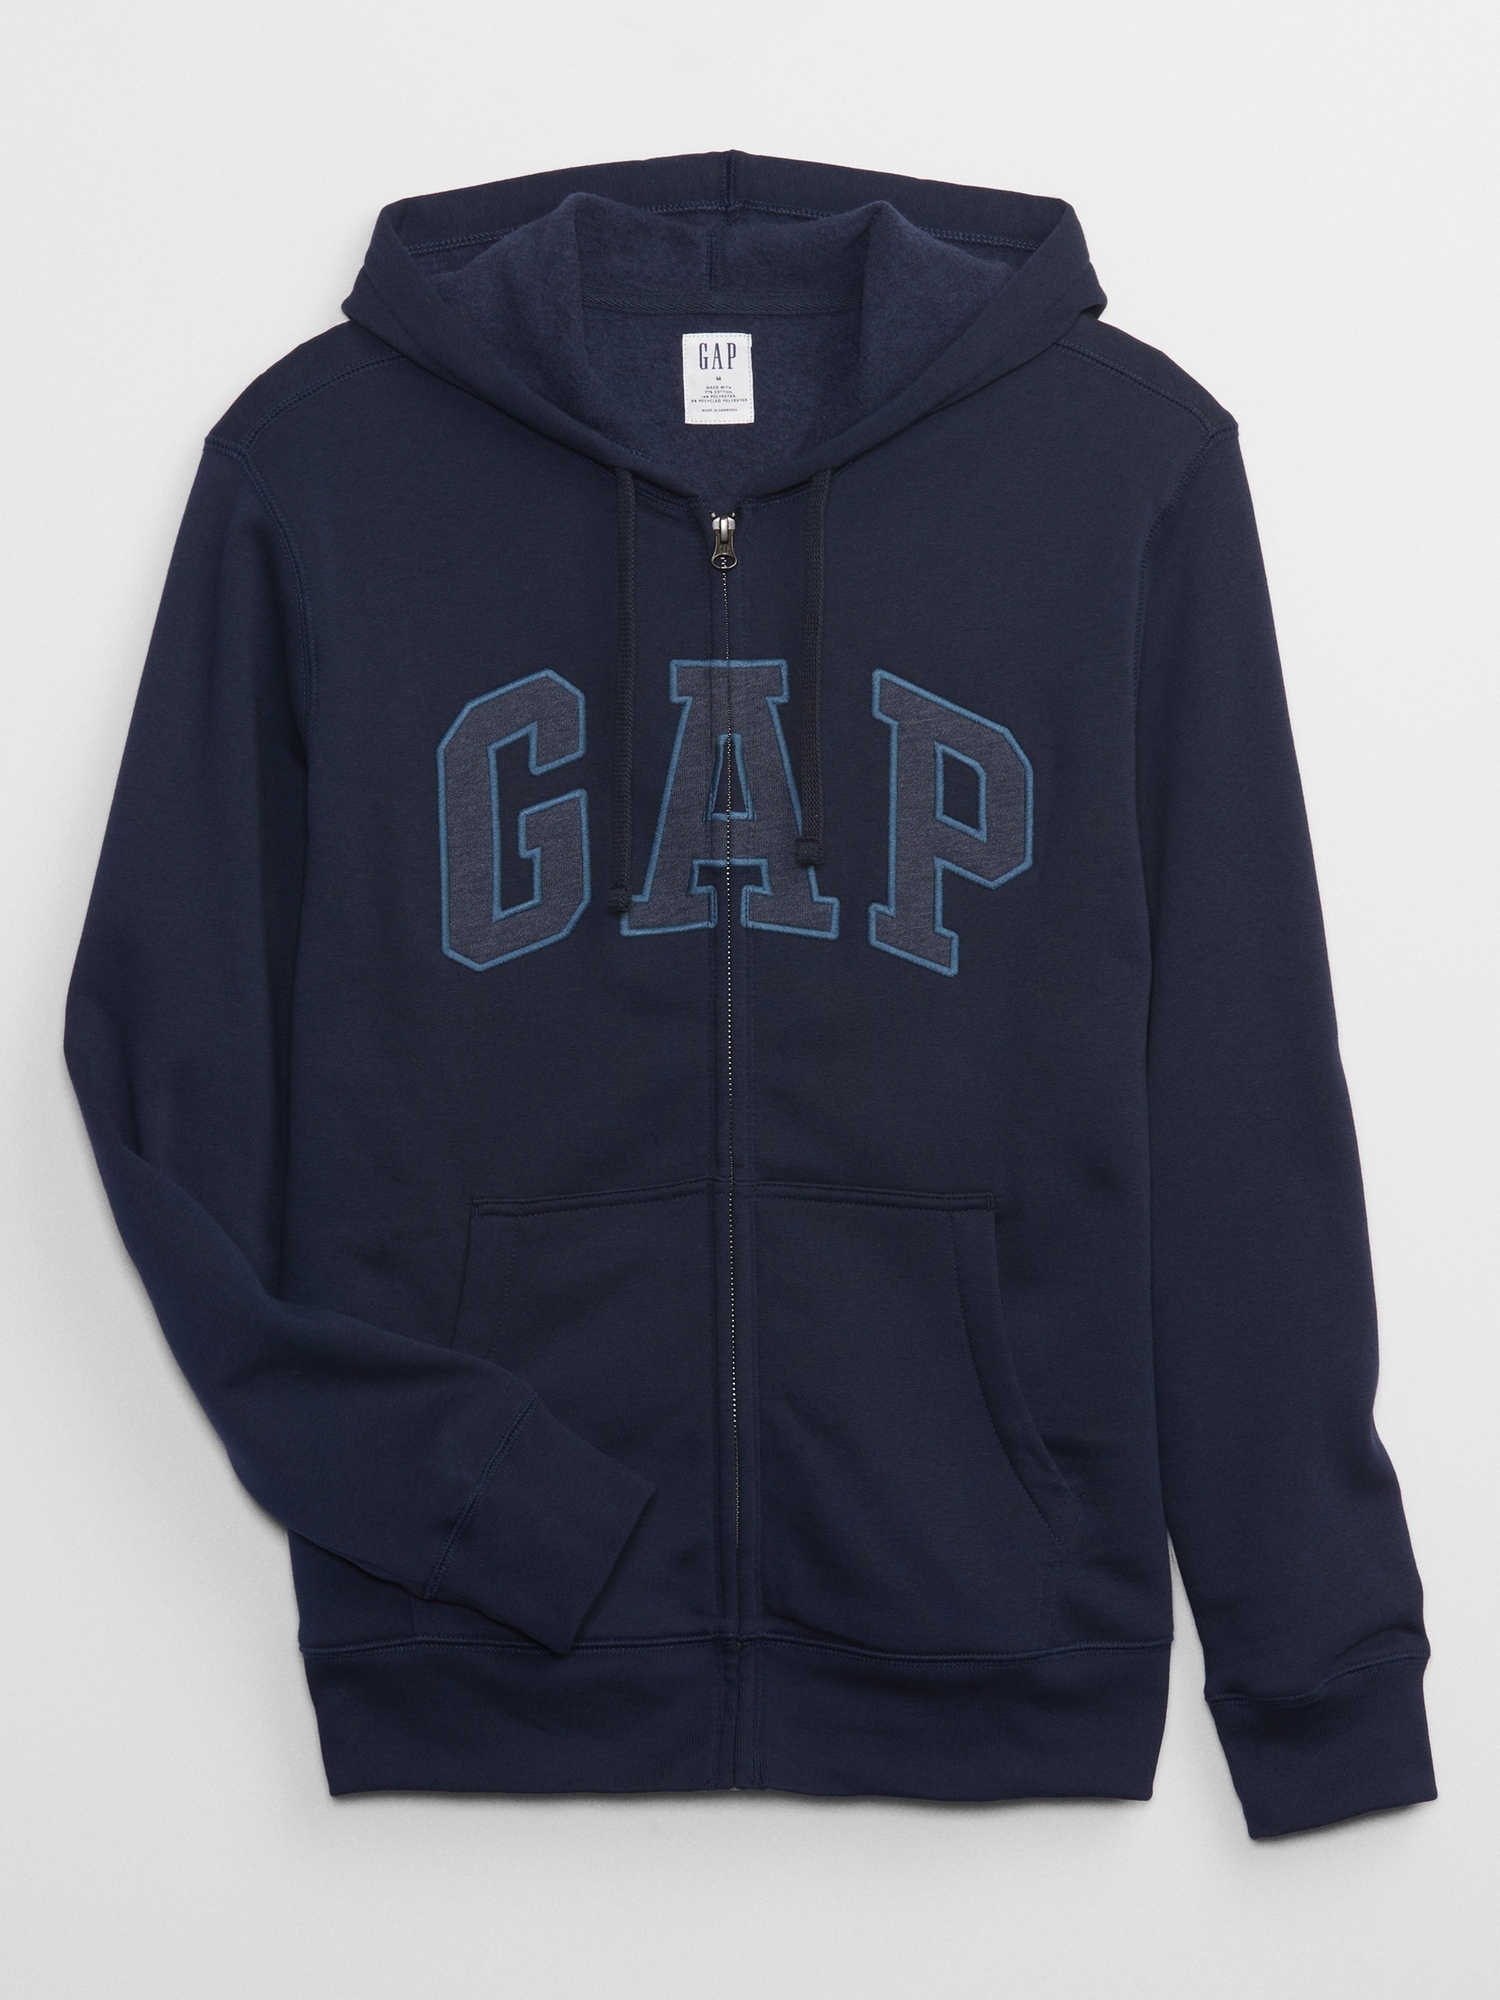 GAP Men's Zippered Jacke  Long sleeve tshirt men, Gap men, Jacket style